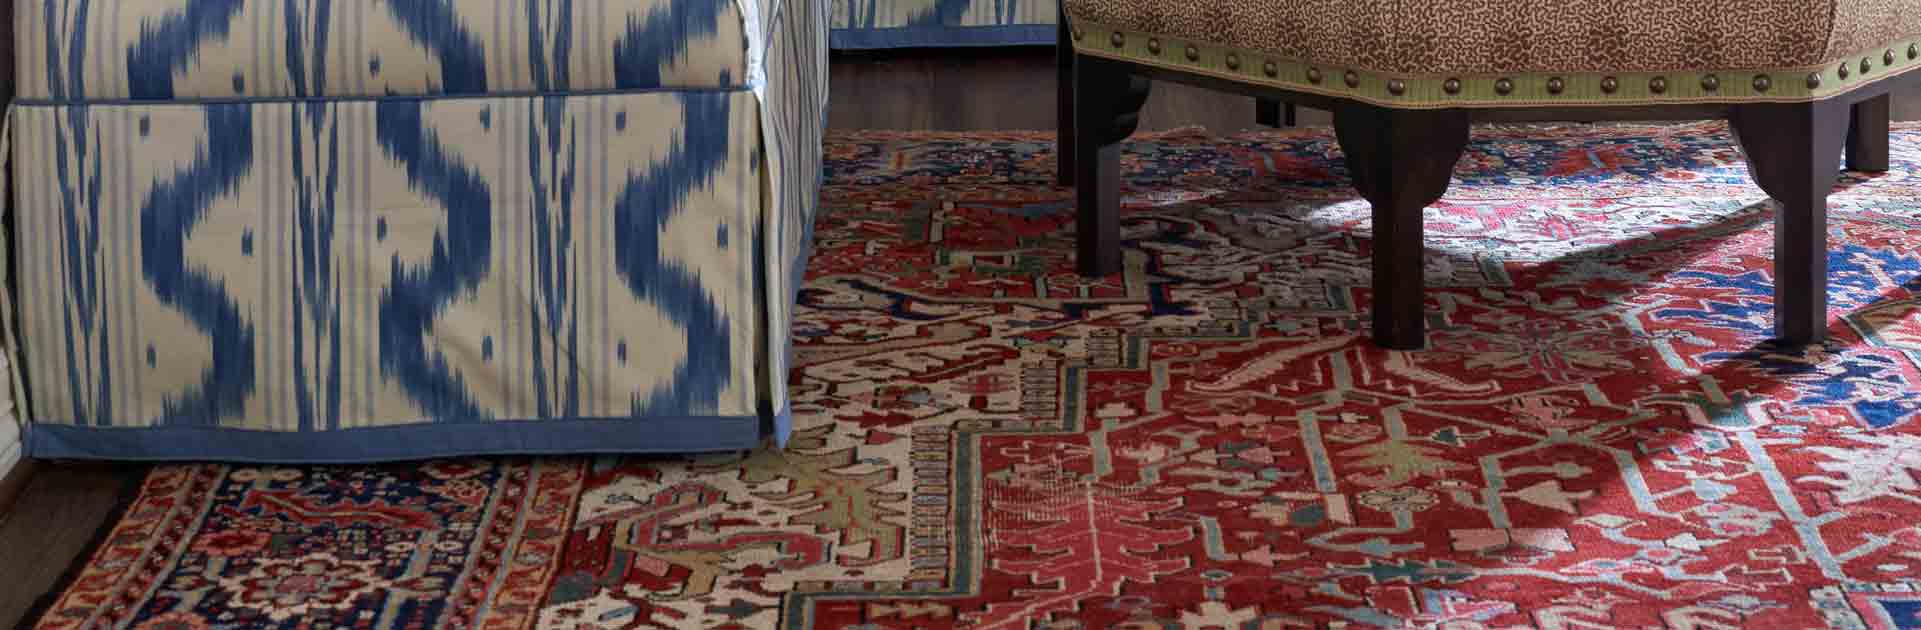 Persian Rugs Carpets Dallas Antique Iranian Vintage Carpets